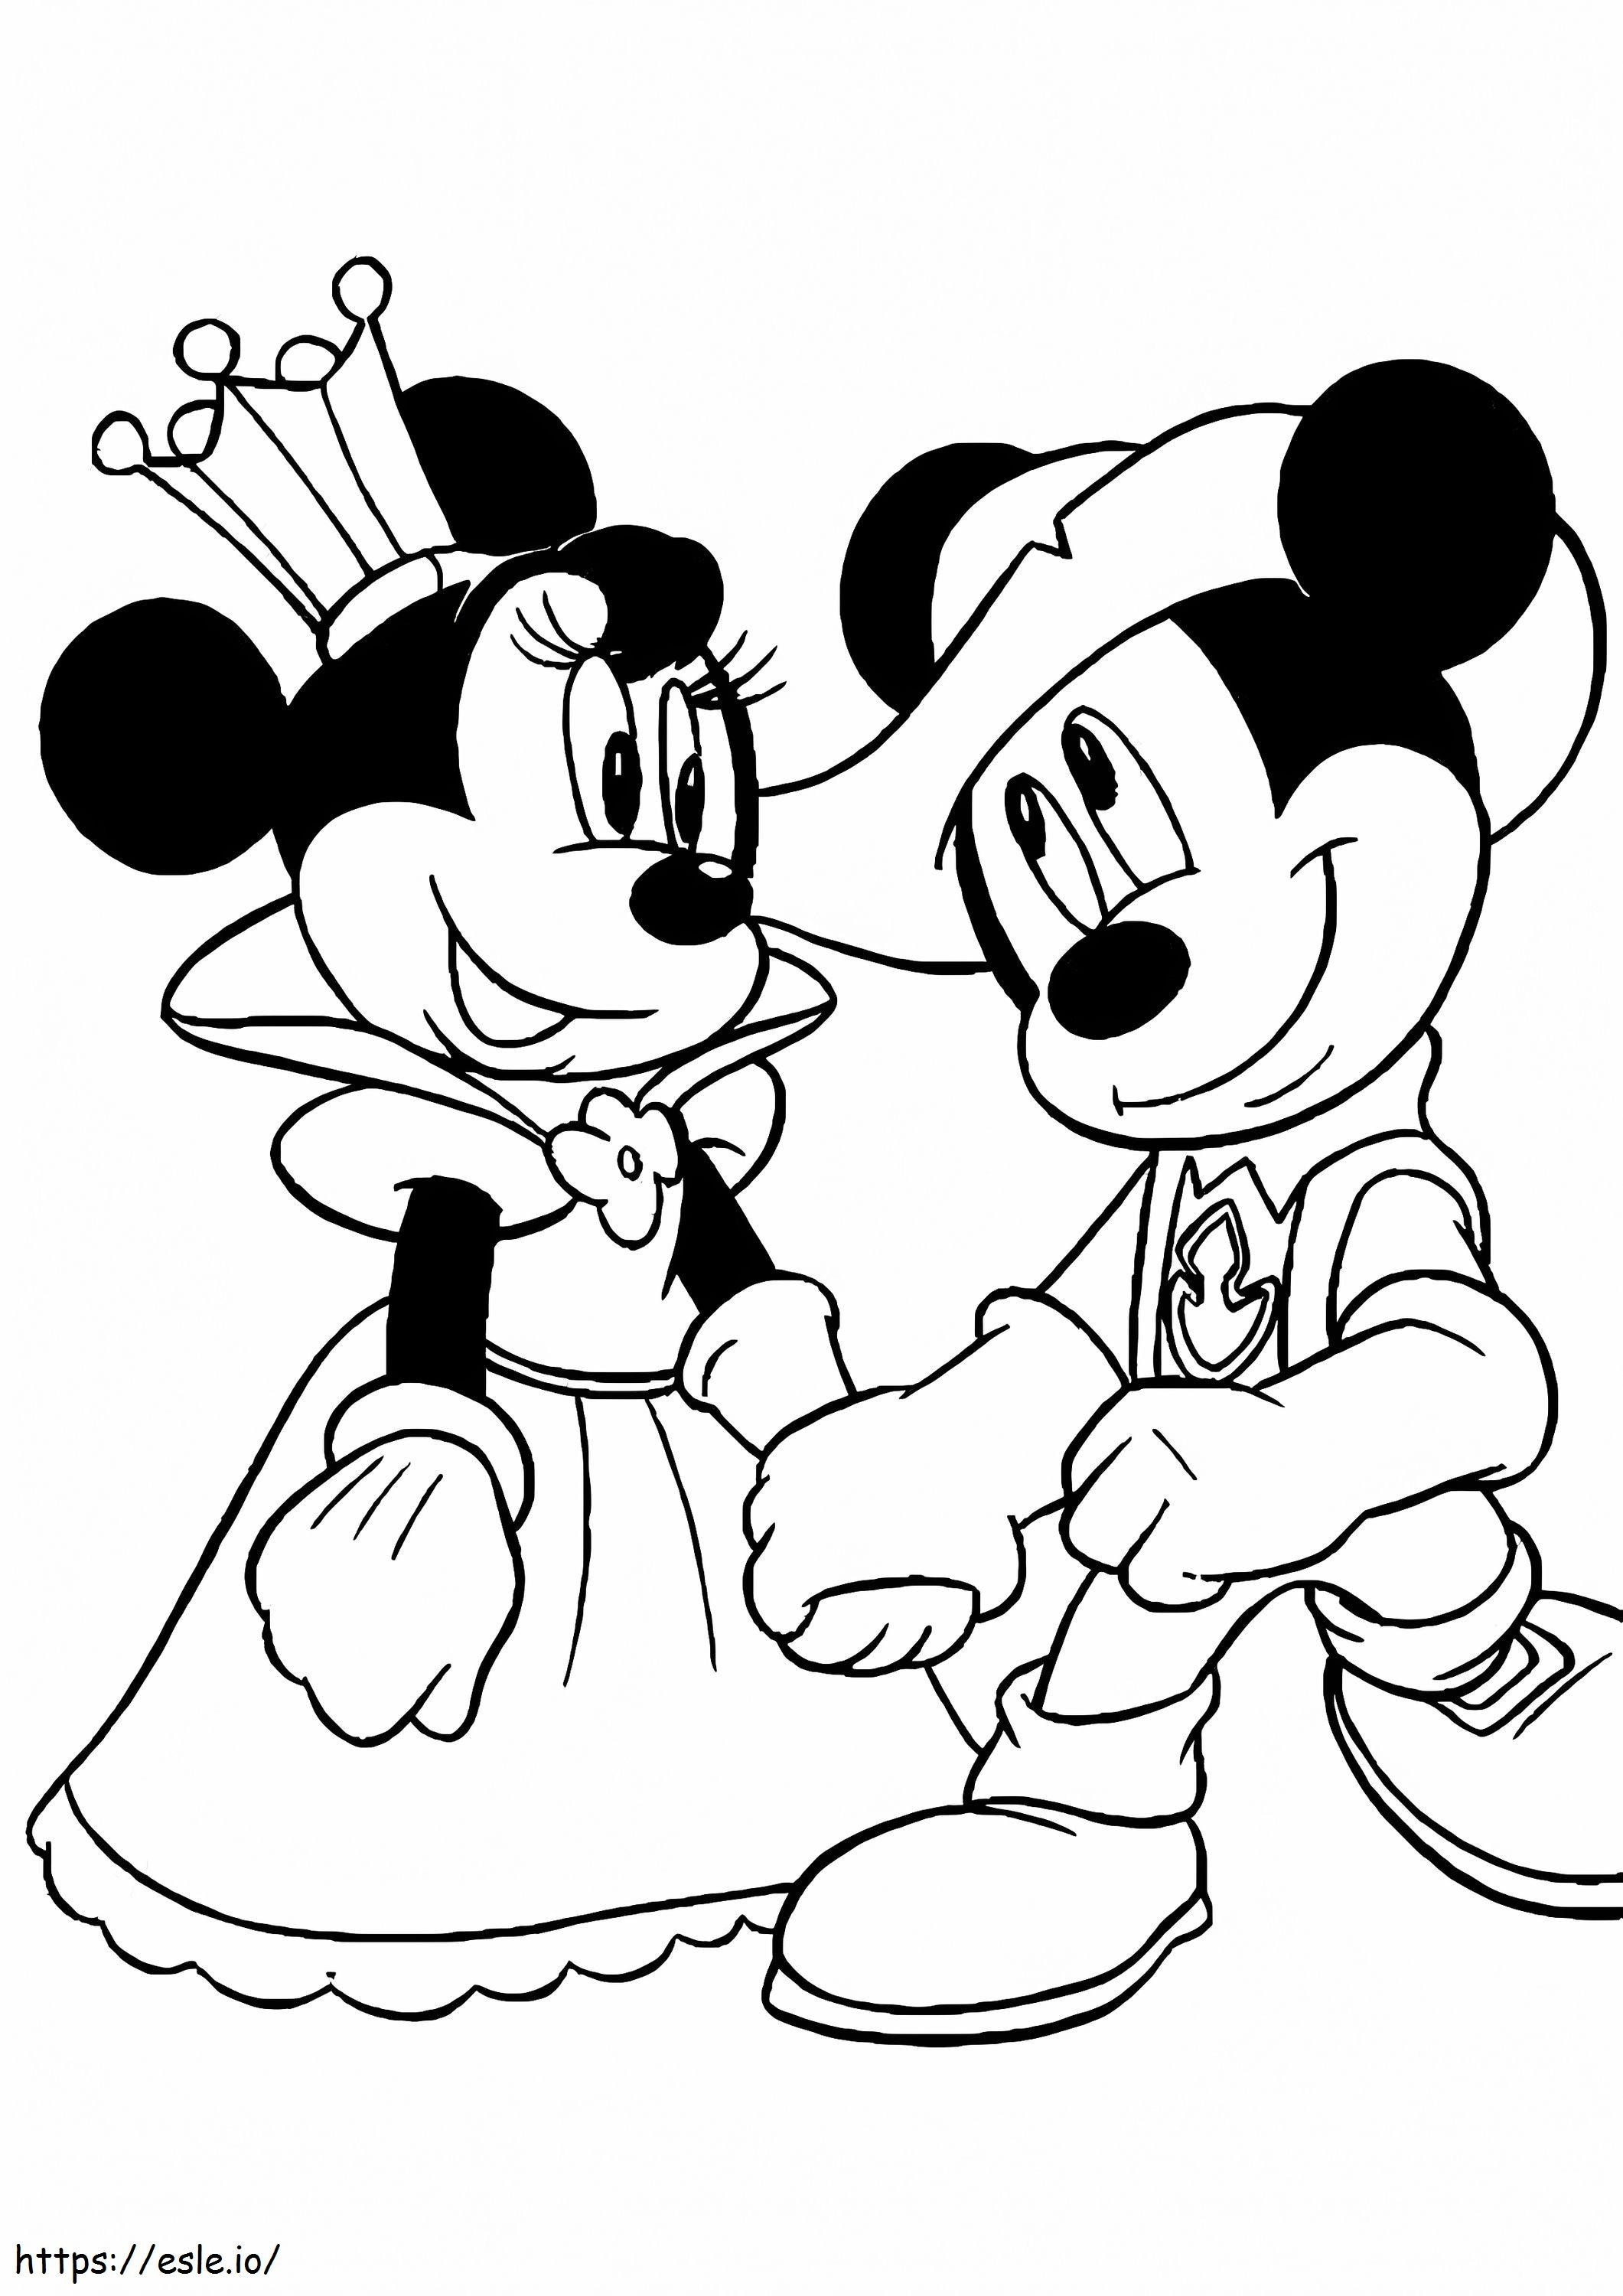 Kraliçe Minnie Fare ve Şövalye Mickey Fare boyama